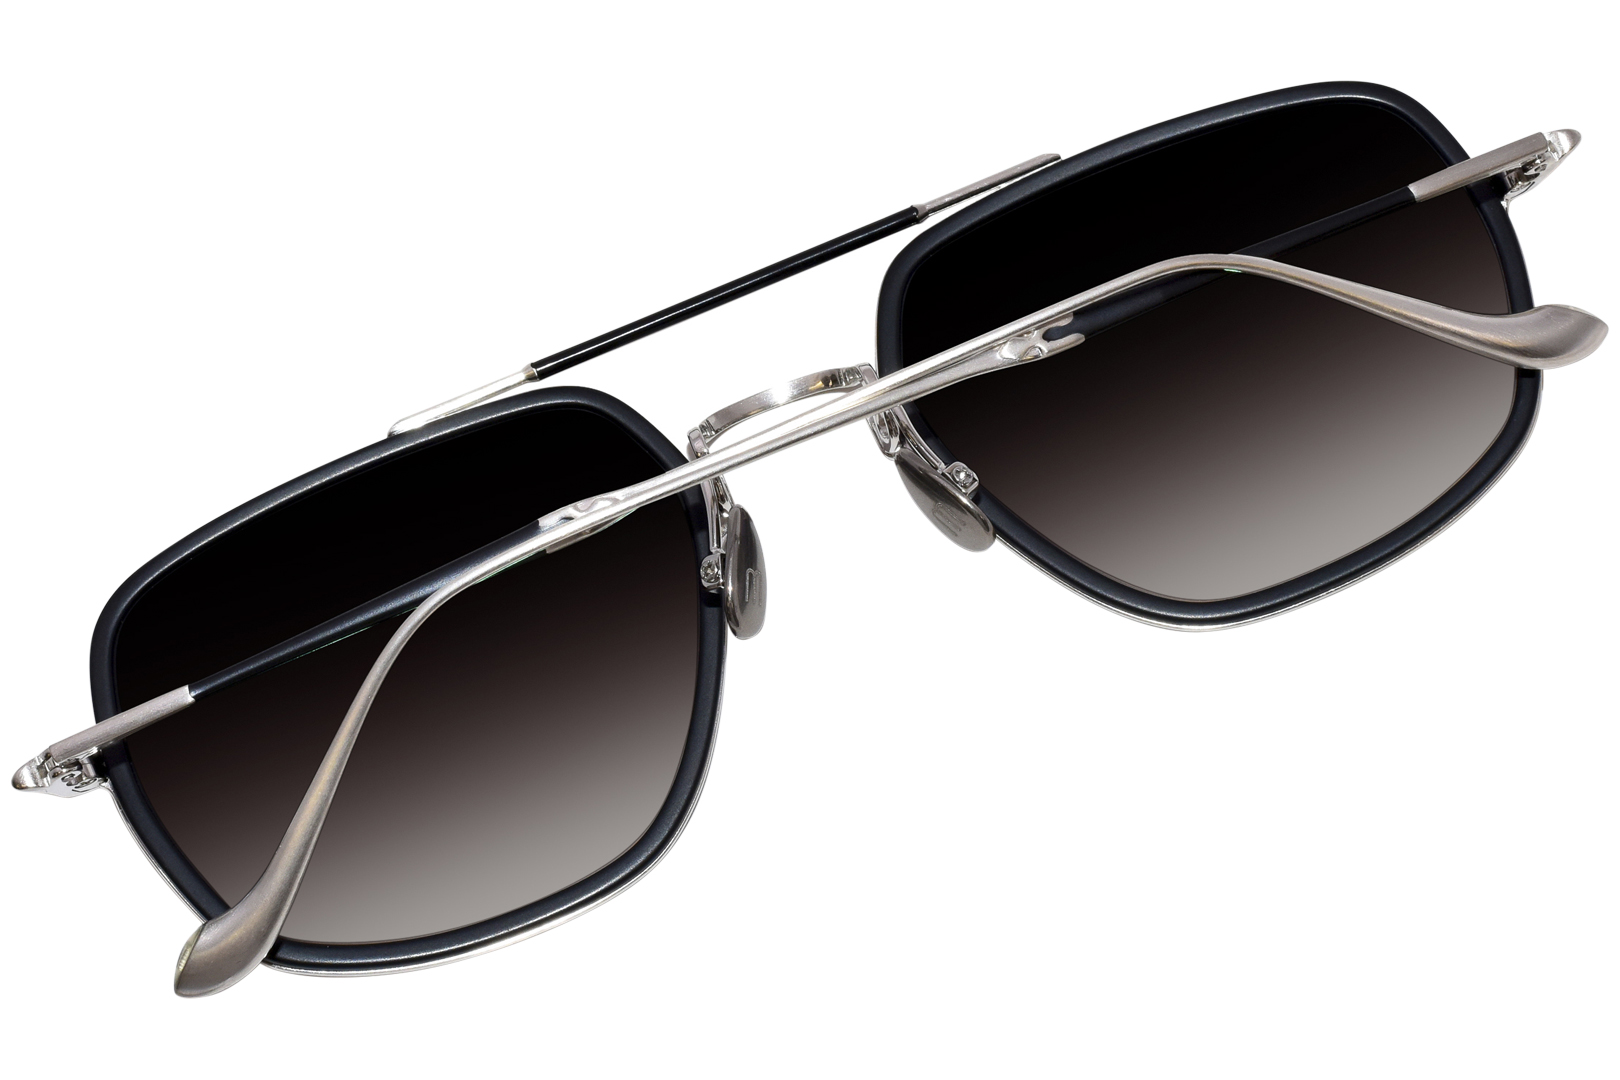 Matsuda Black M3123 Sunglasses